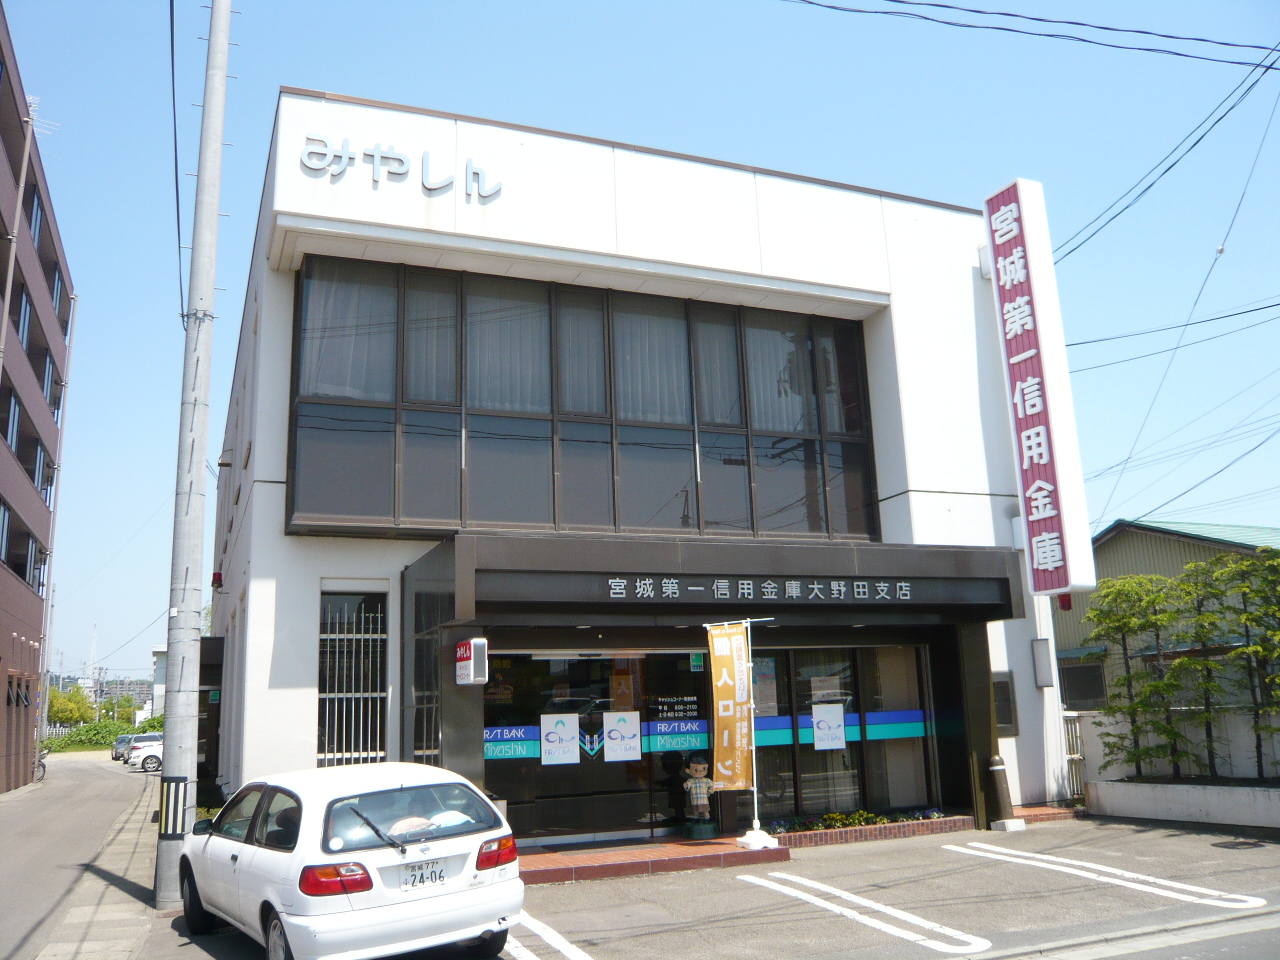 Bank. 400m until Miyagi first credit union Onoda Branch (Bank)